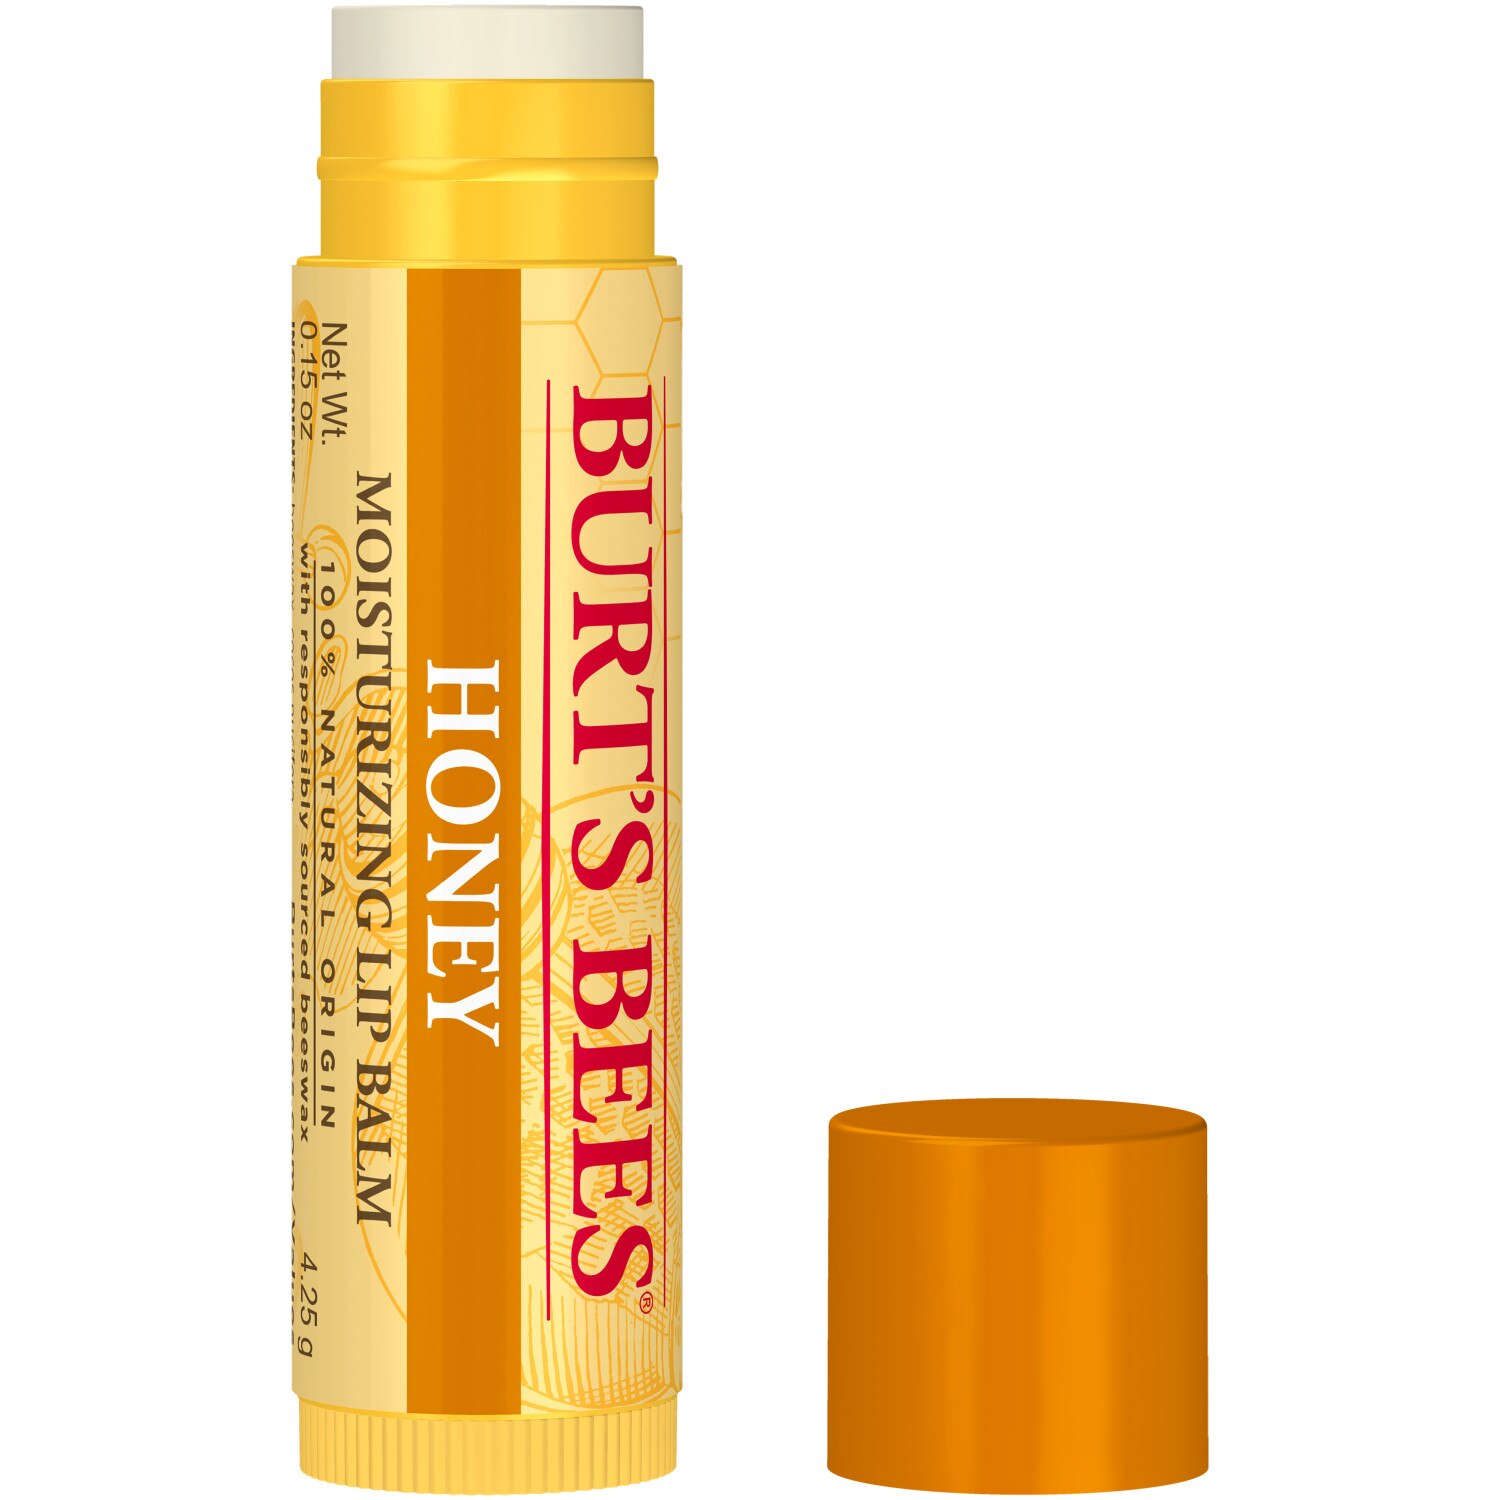 Burt's Bees 100% Natural Moisturizing Lip Balm, Honey With Beeswax - 0.15 Oz , CVS